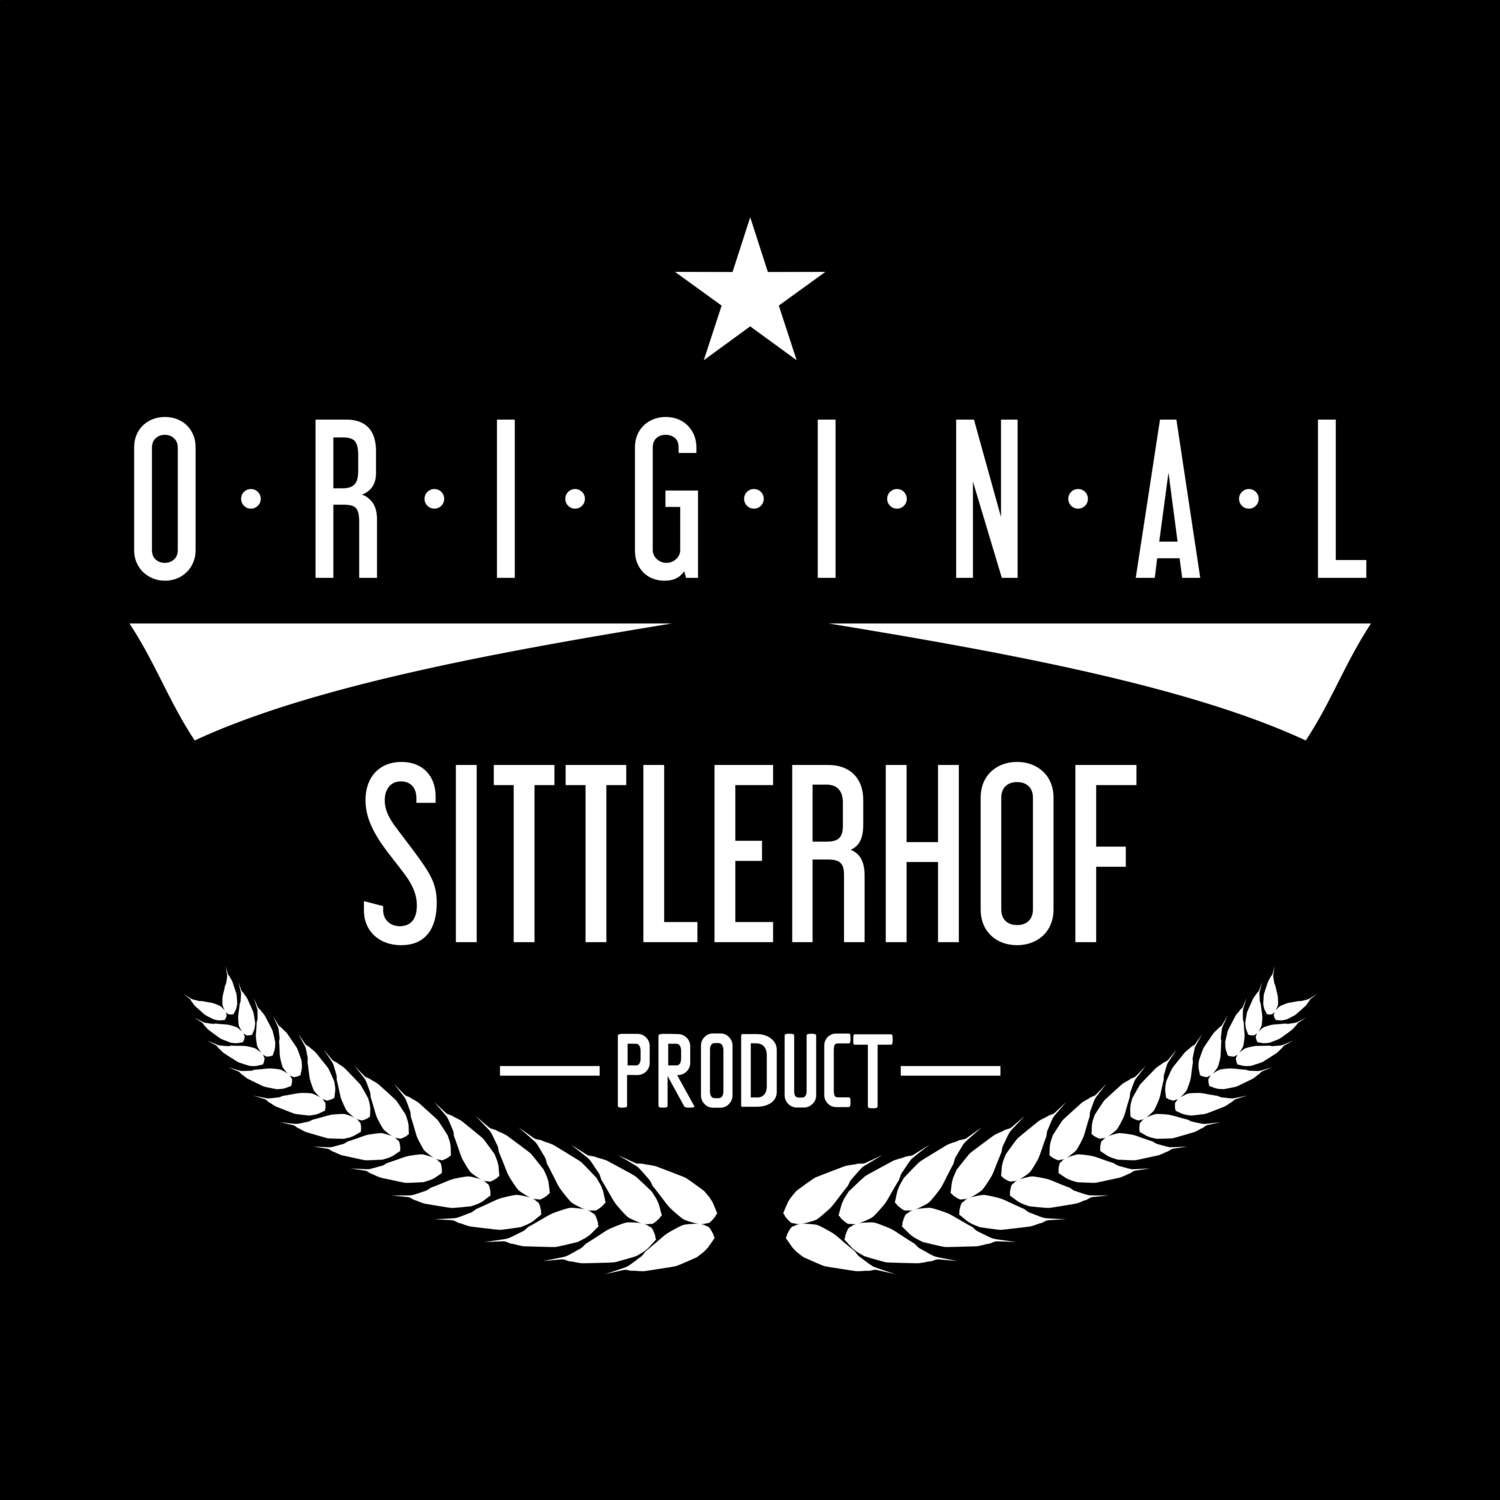 Sittlerhof T-Shirt »Original Product«